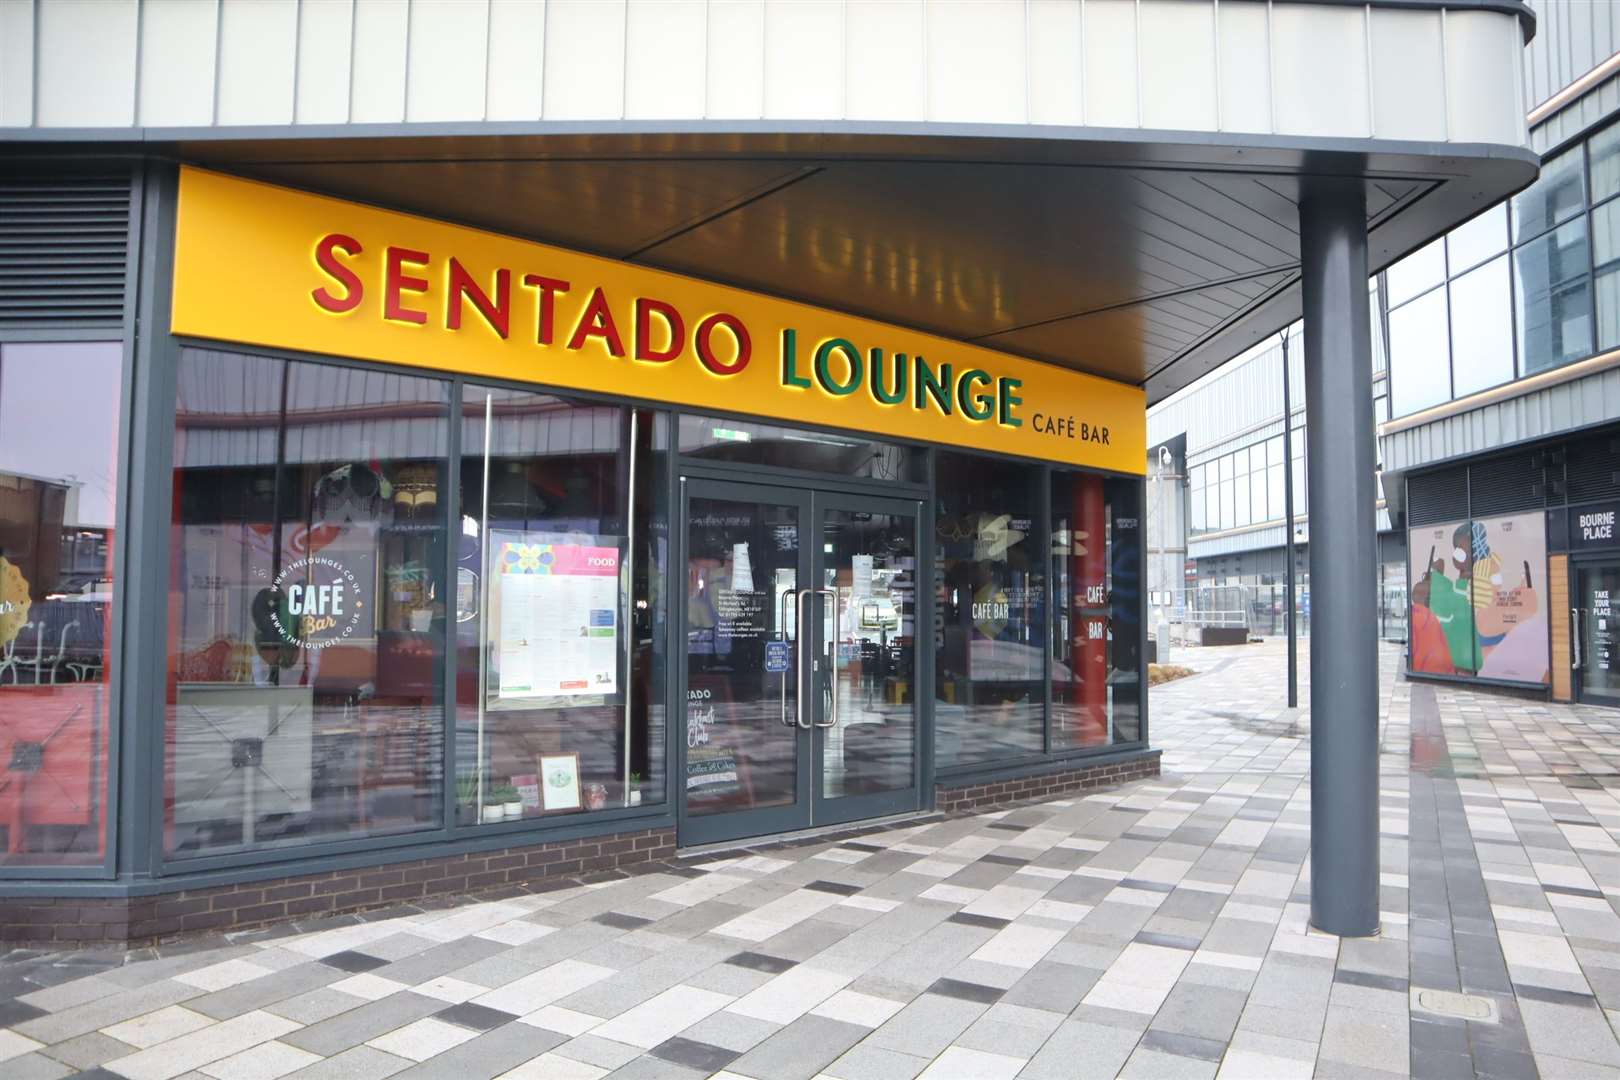 The Sentado Lounge beneath the Travelodge hotel in Sittingbourne